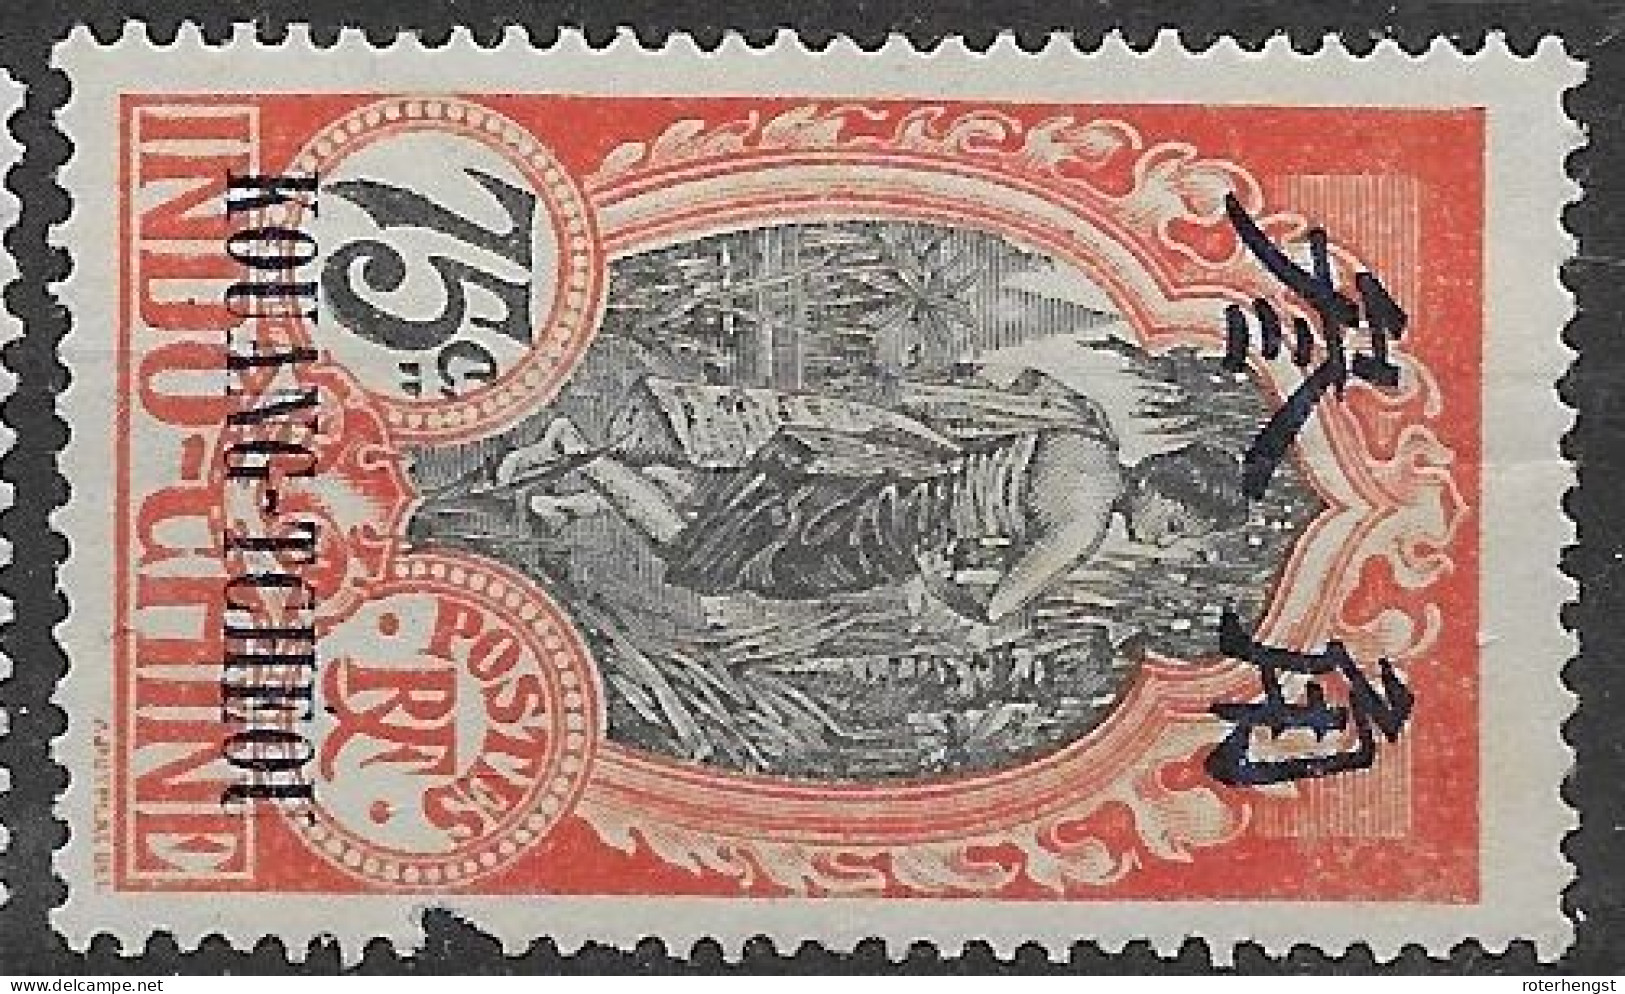 Kouang Tcheou China Mh * 1908 19 Euros (dent Manquante, Perf Fault) - Ungebraucht